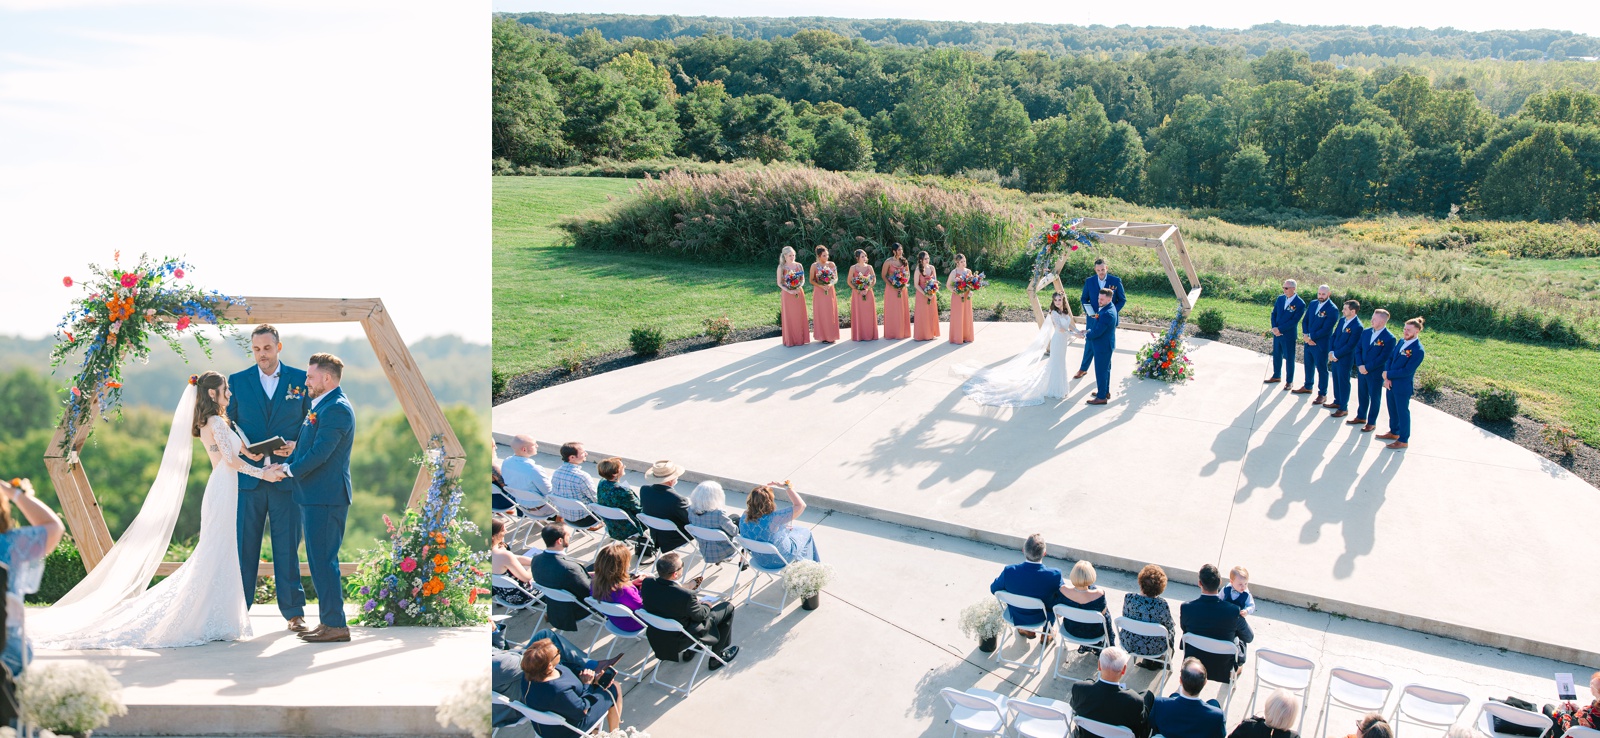 Summer wedding at Provence Mills in Girard Ohio